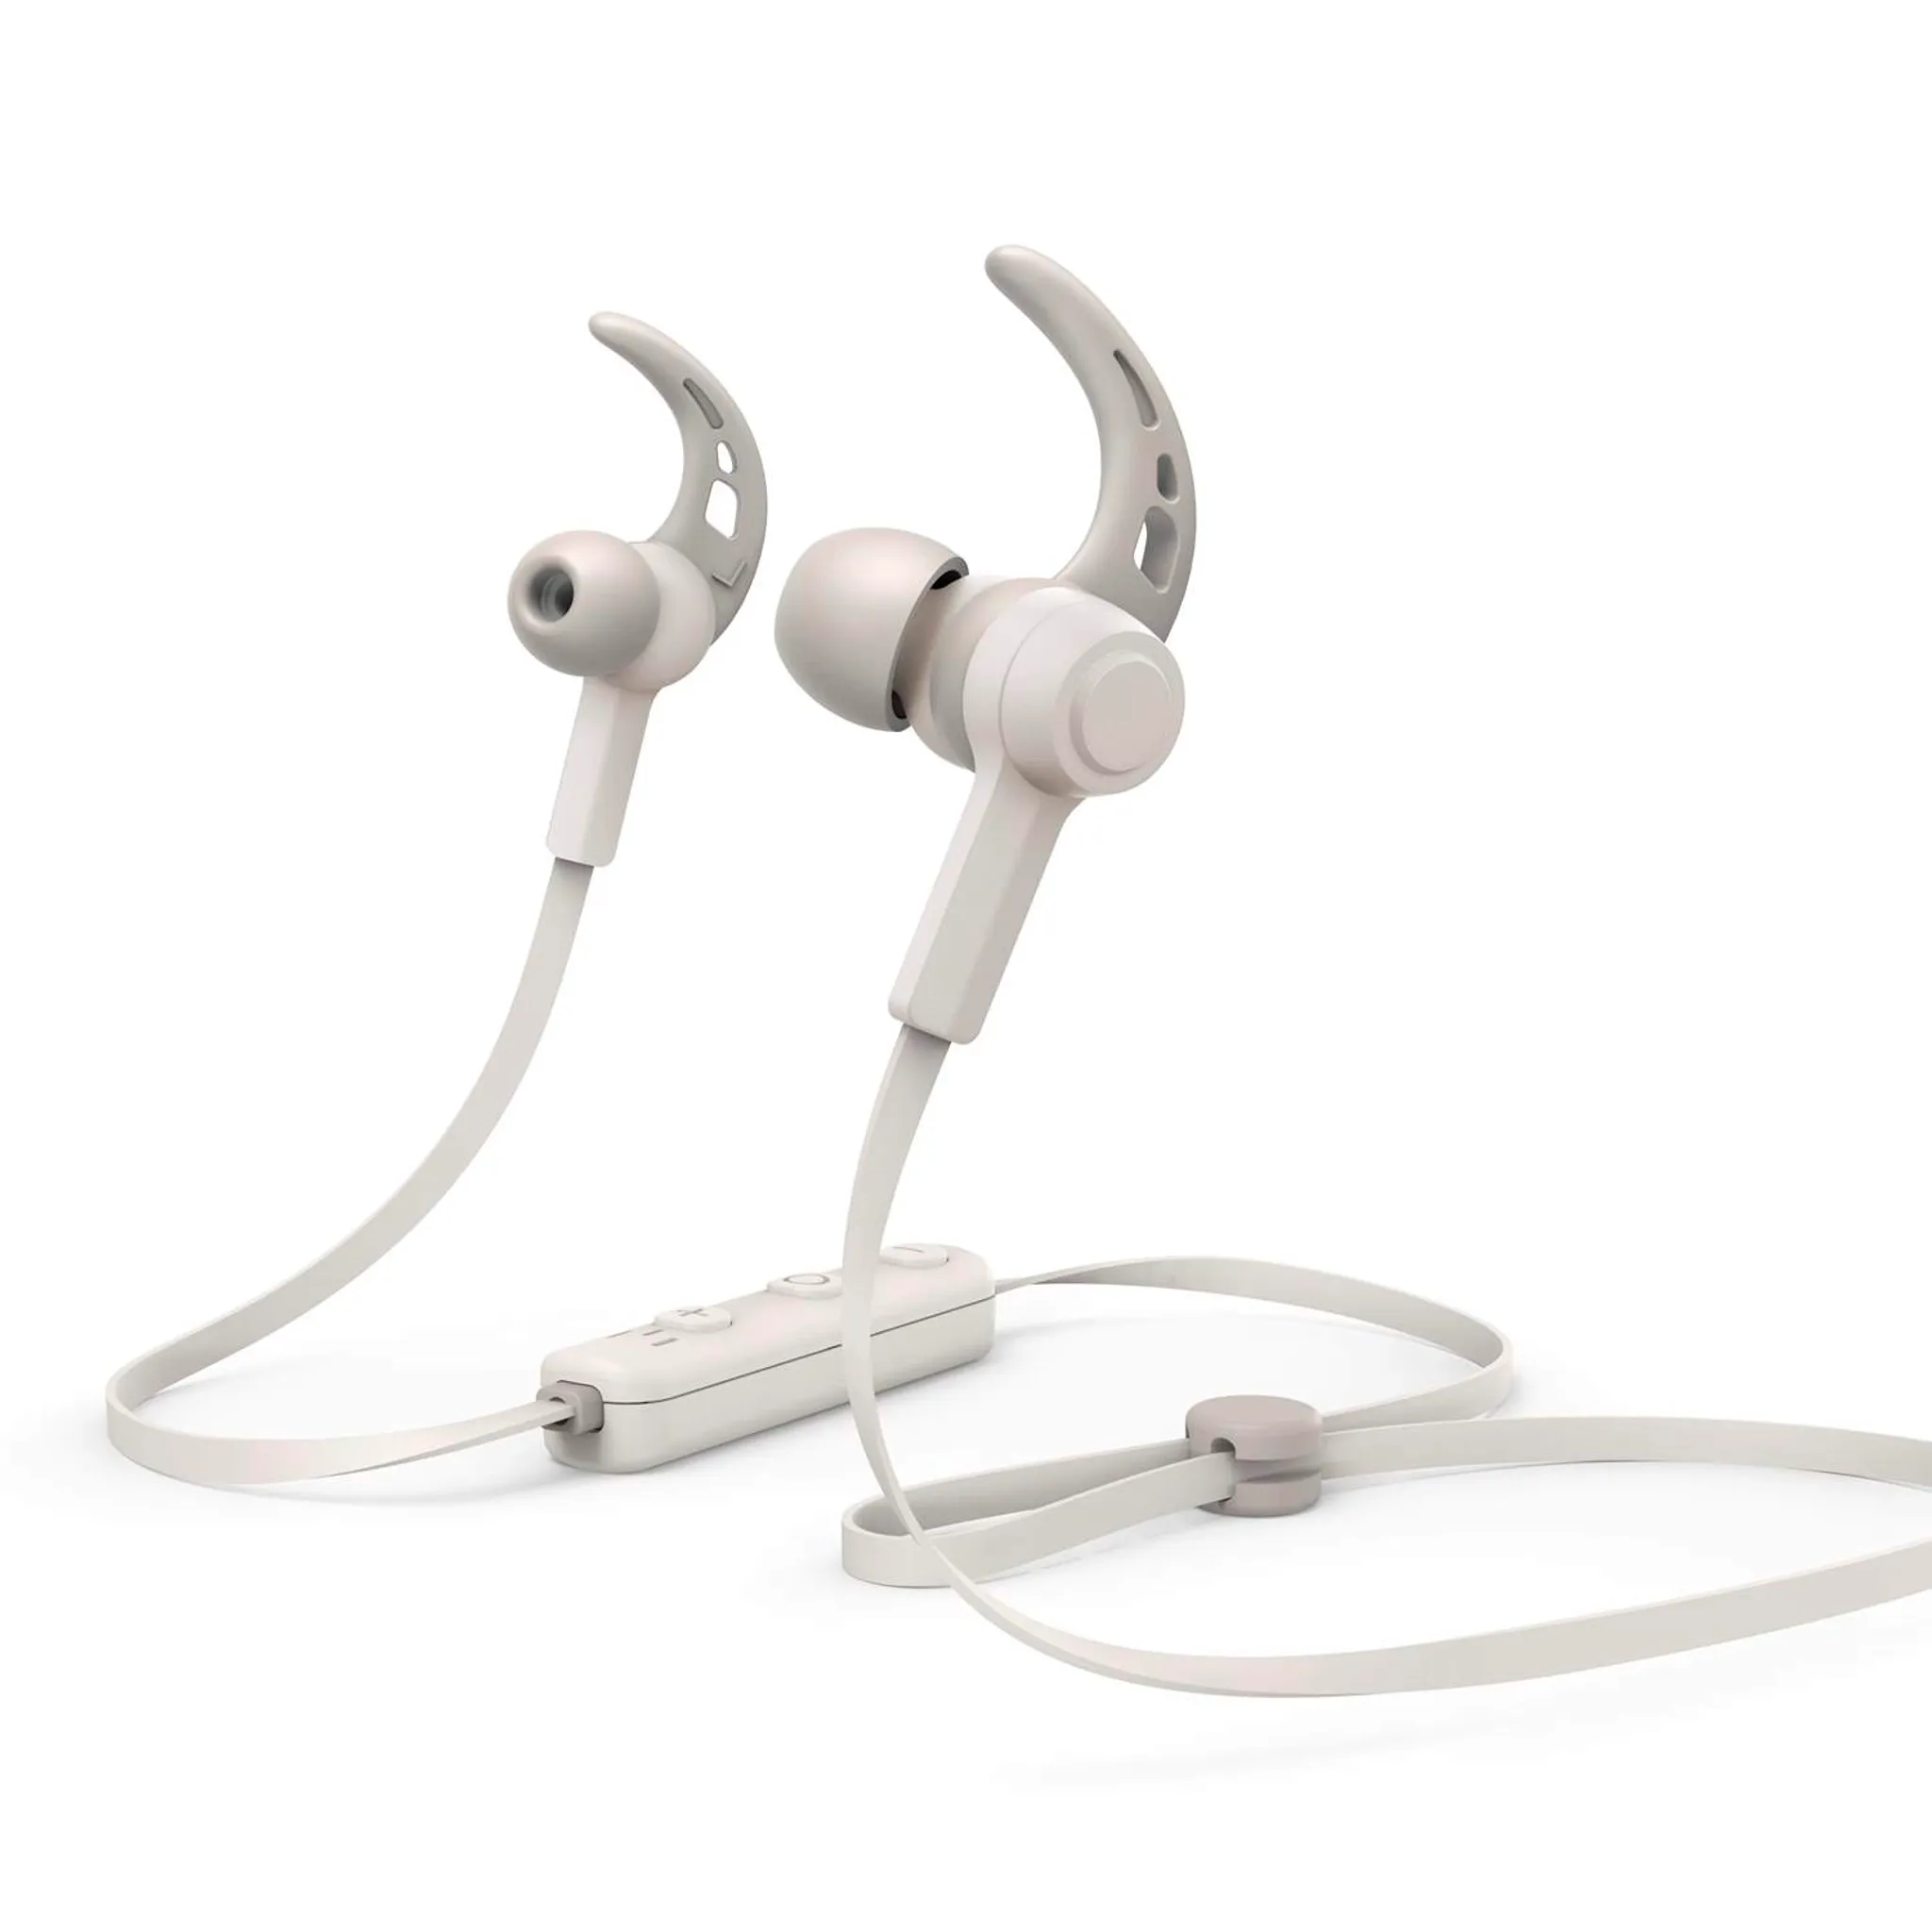 Hama Bluetooth®-In-Ear-Stereo-Headset Connect silver birch/warm grey  Mikrofon